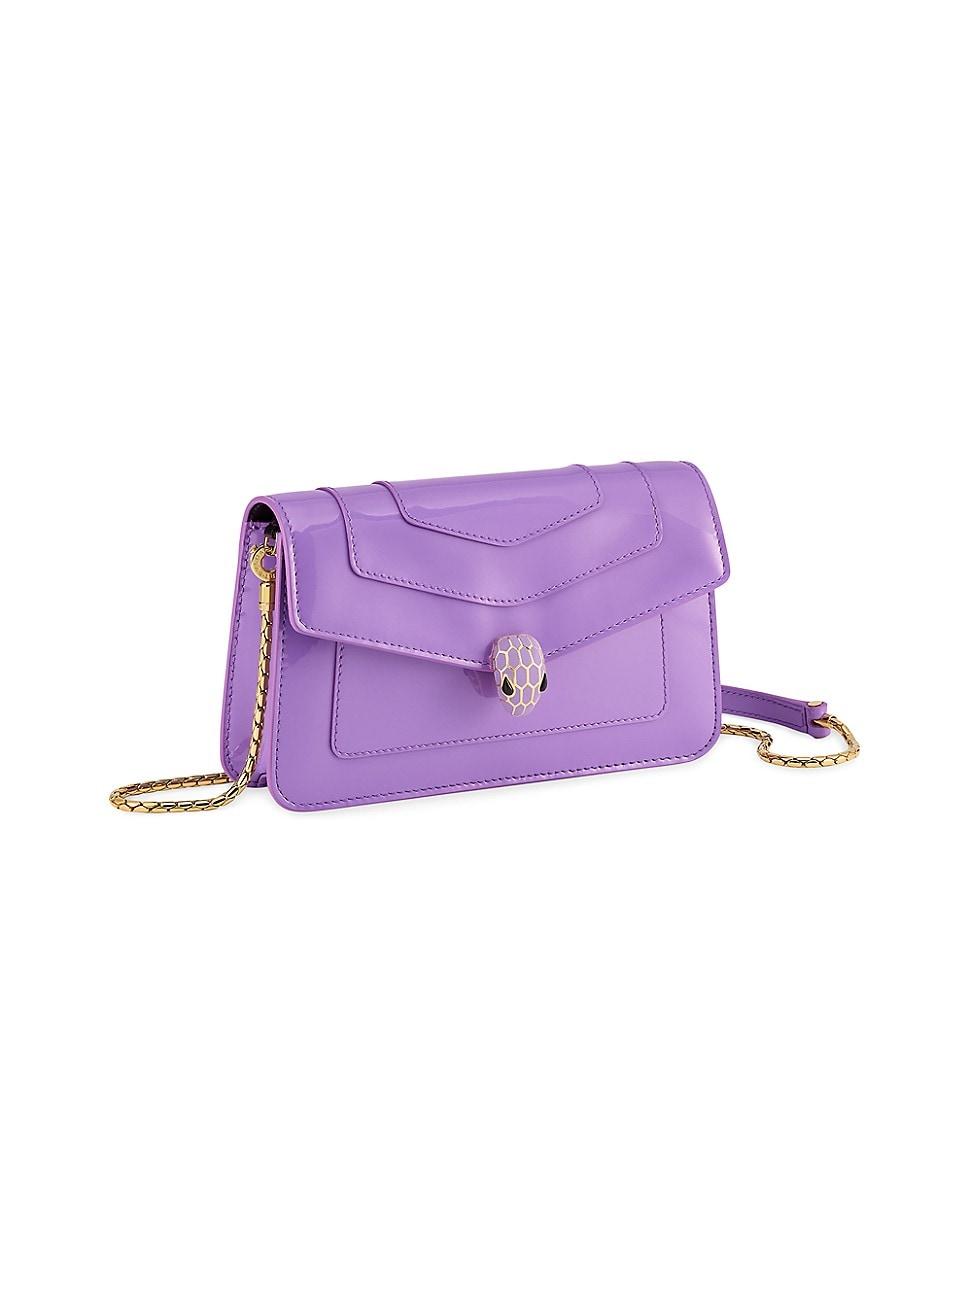 BVLGARI Serpenti Forever Leather Chain Pochette Bag in Purple | Lyst